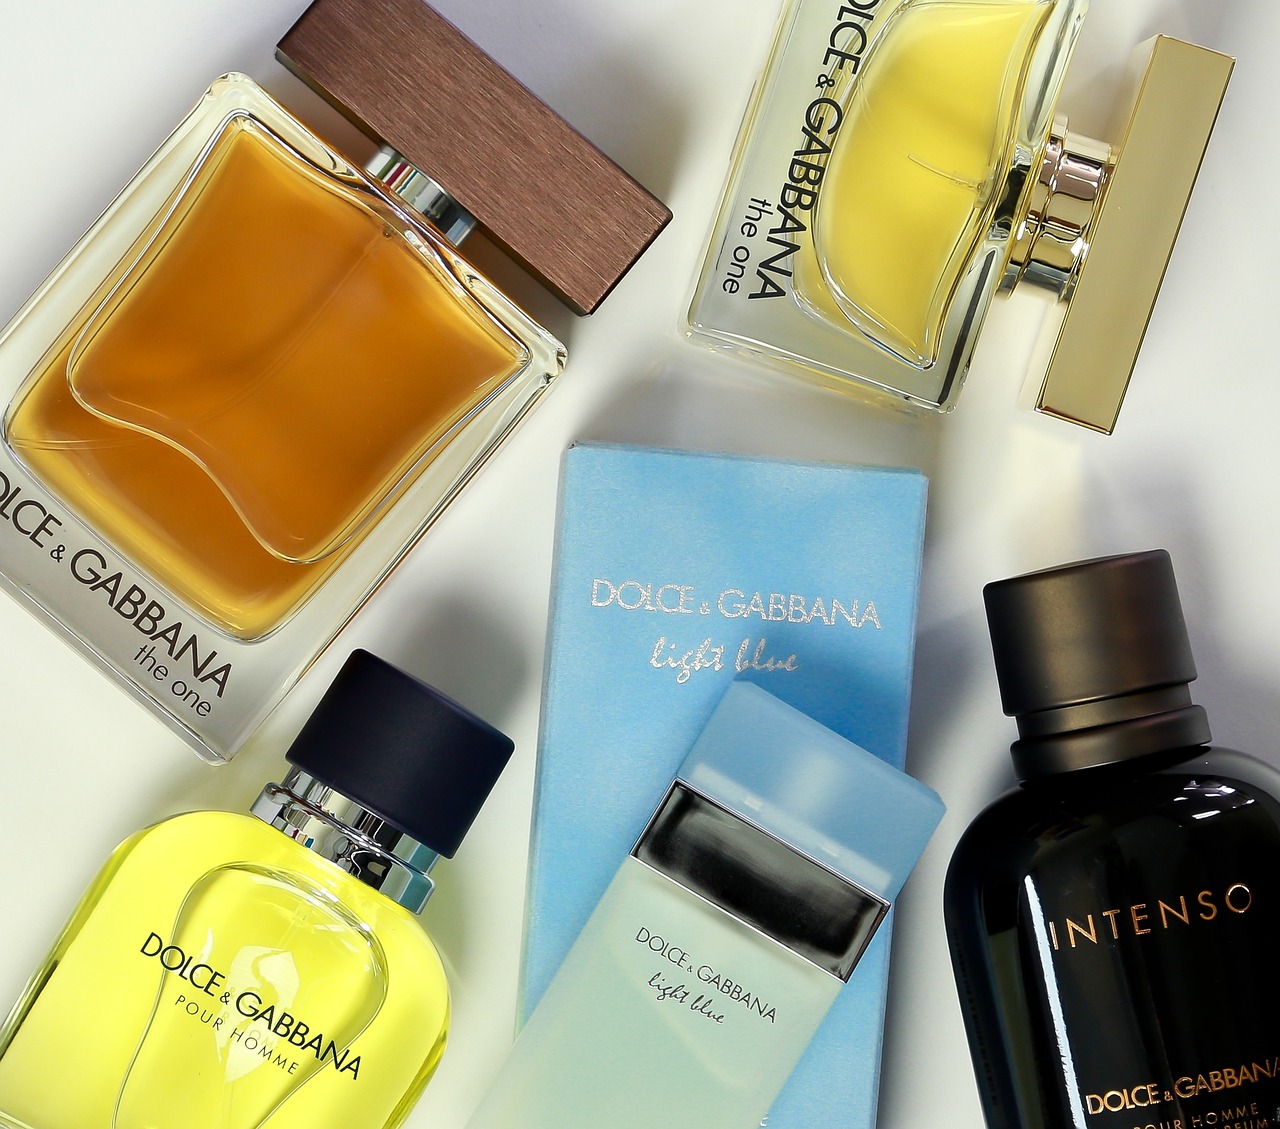 Luxury fragrance perfume bottles